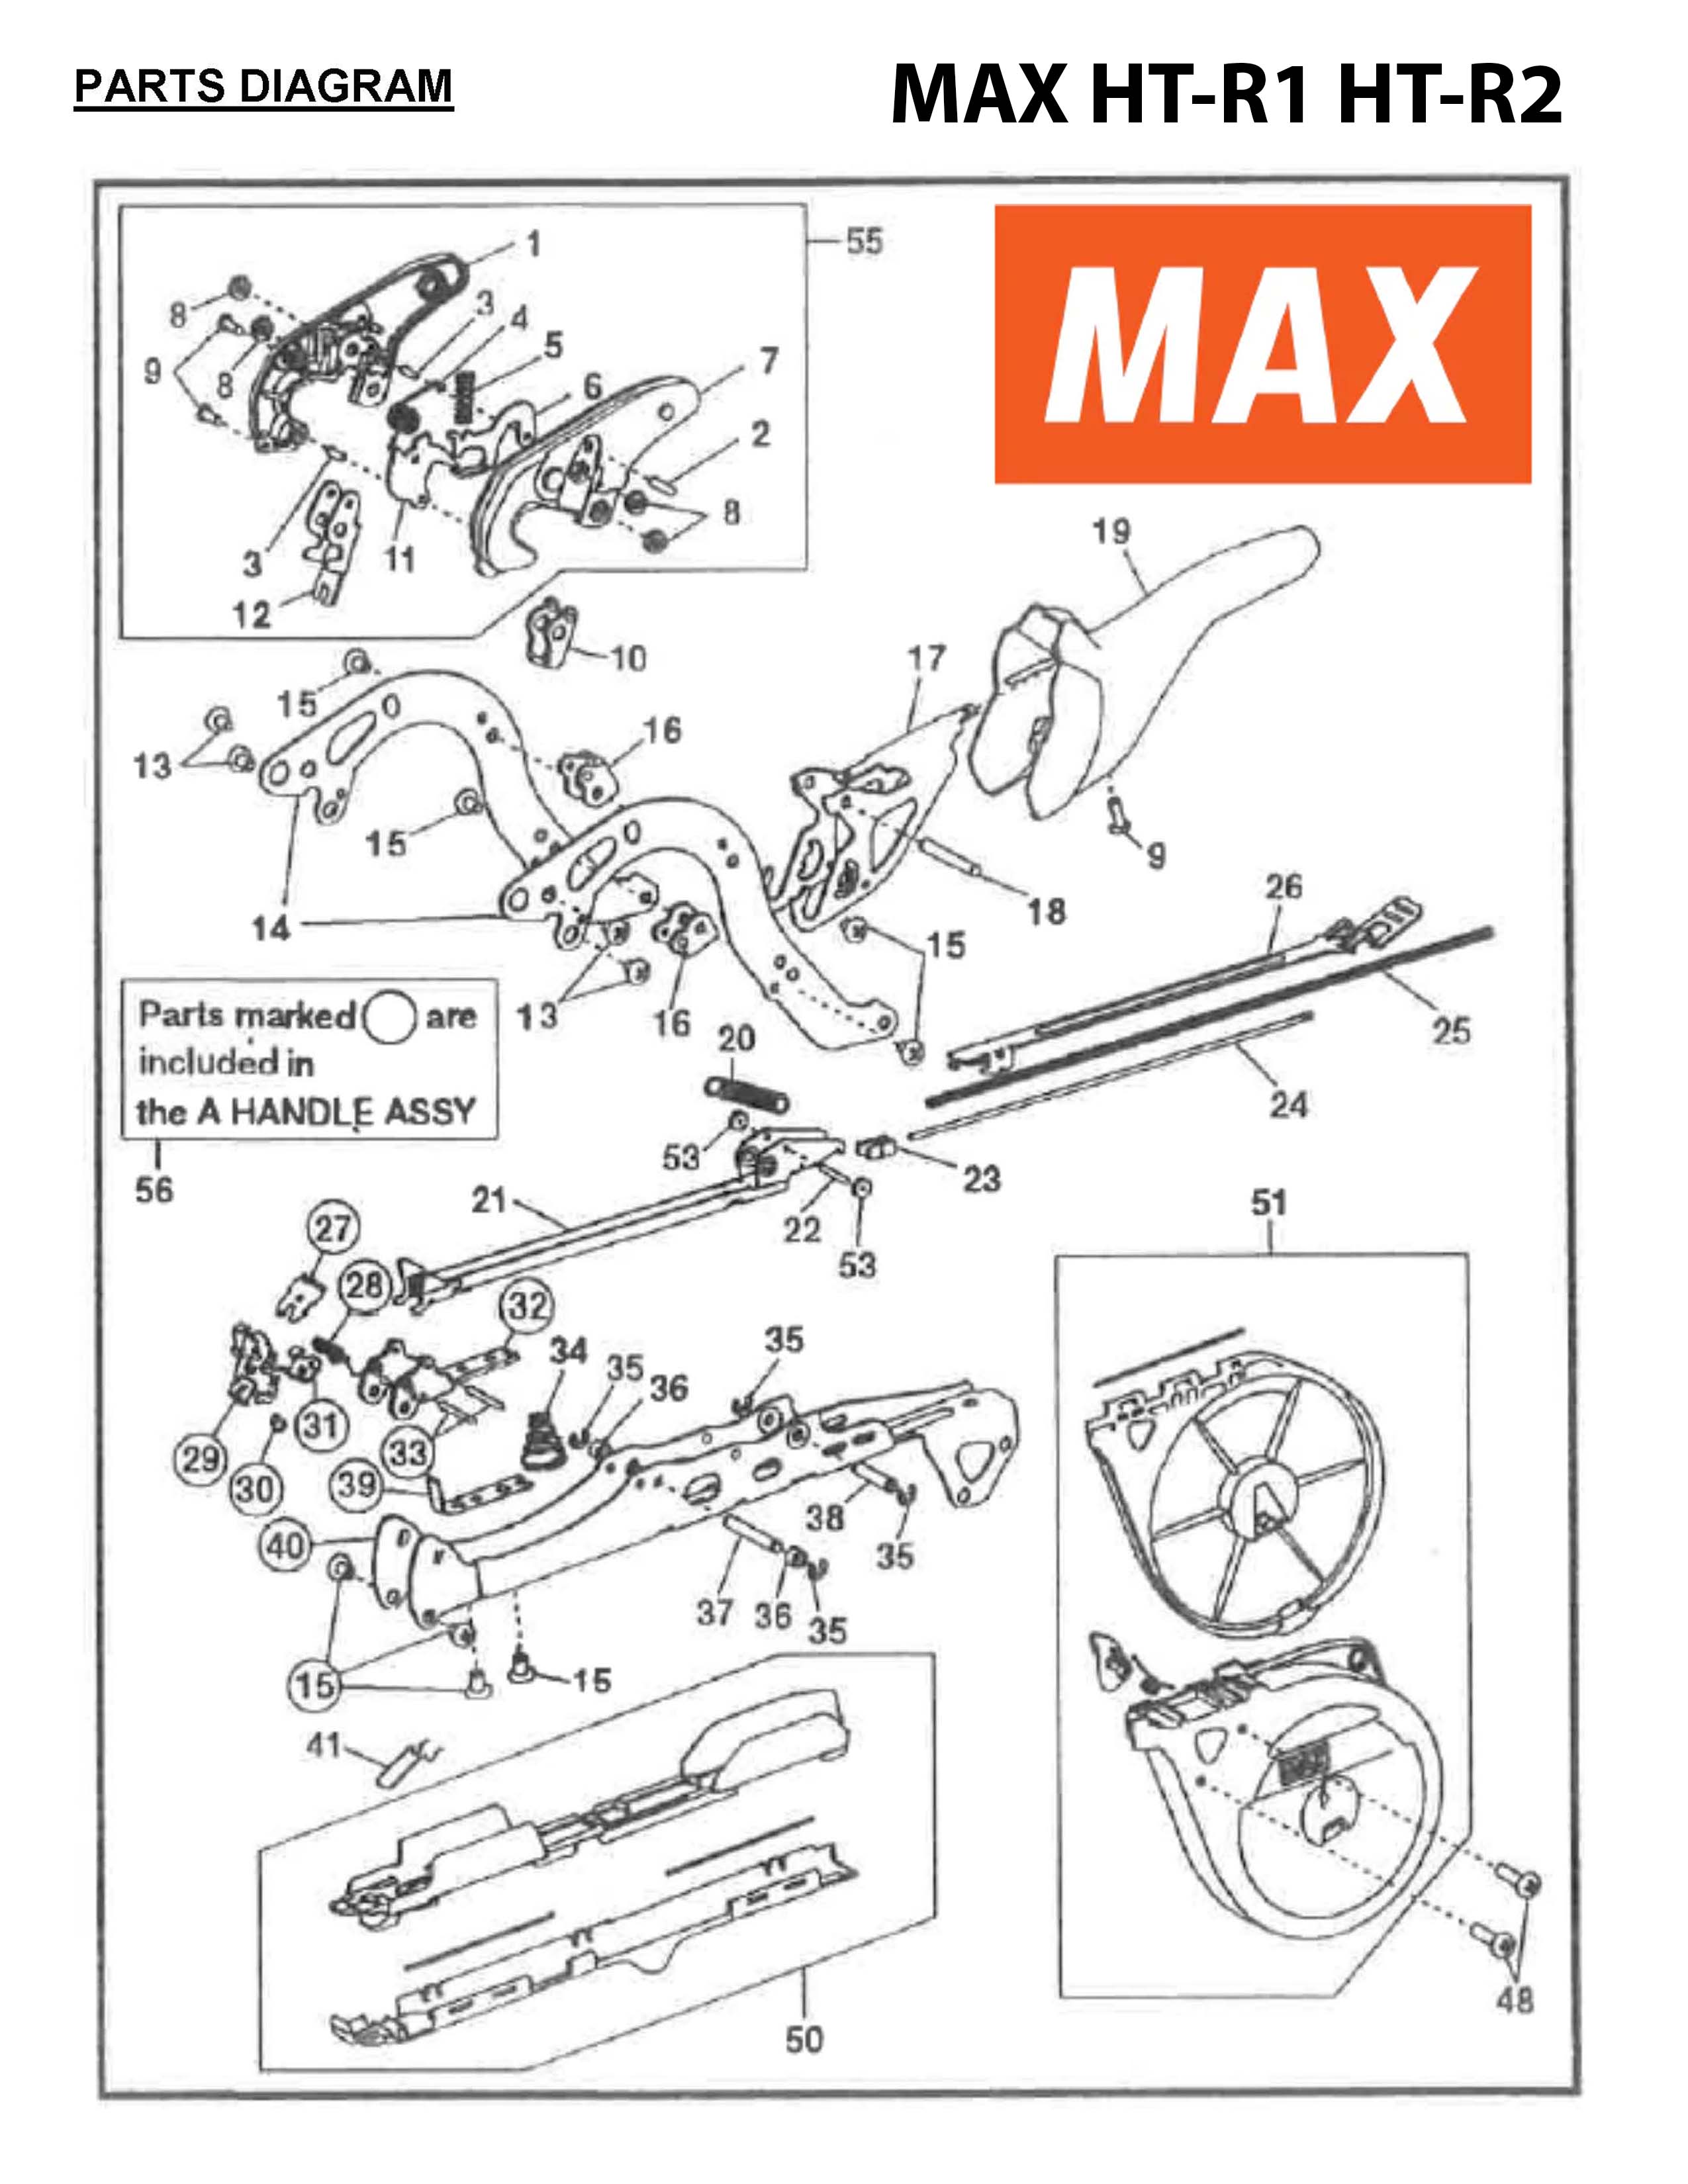 MAX Tapener Part HT70061 MAGAZINE UNIT Fits MAX HT-R1 HT-R2 #21